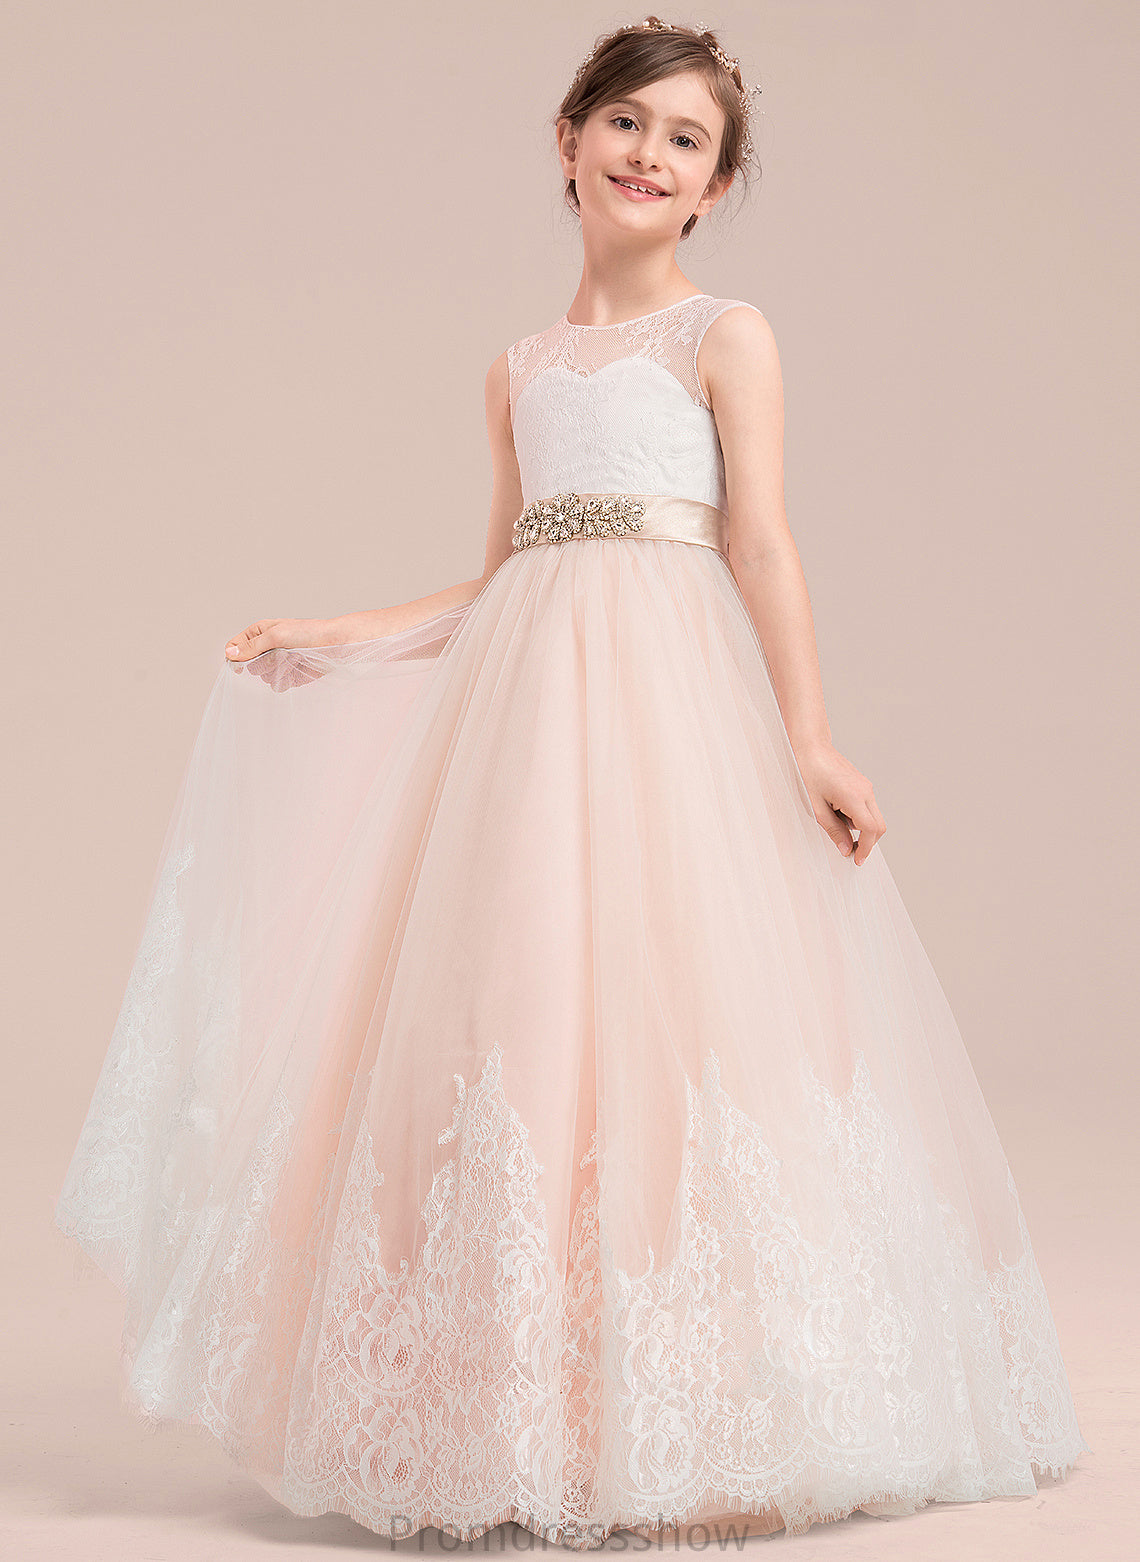 Scoop Flower Girl Dresses Girl Erin Ball-Gown/Princess Flower Floor-length - With Dress Sleeveless Beading Satin/Tulle/Lace Neck